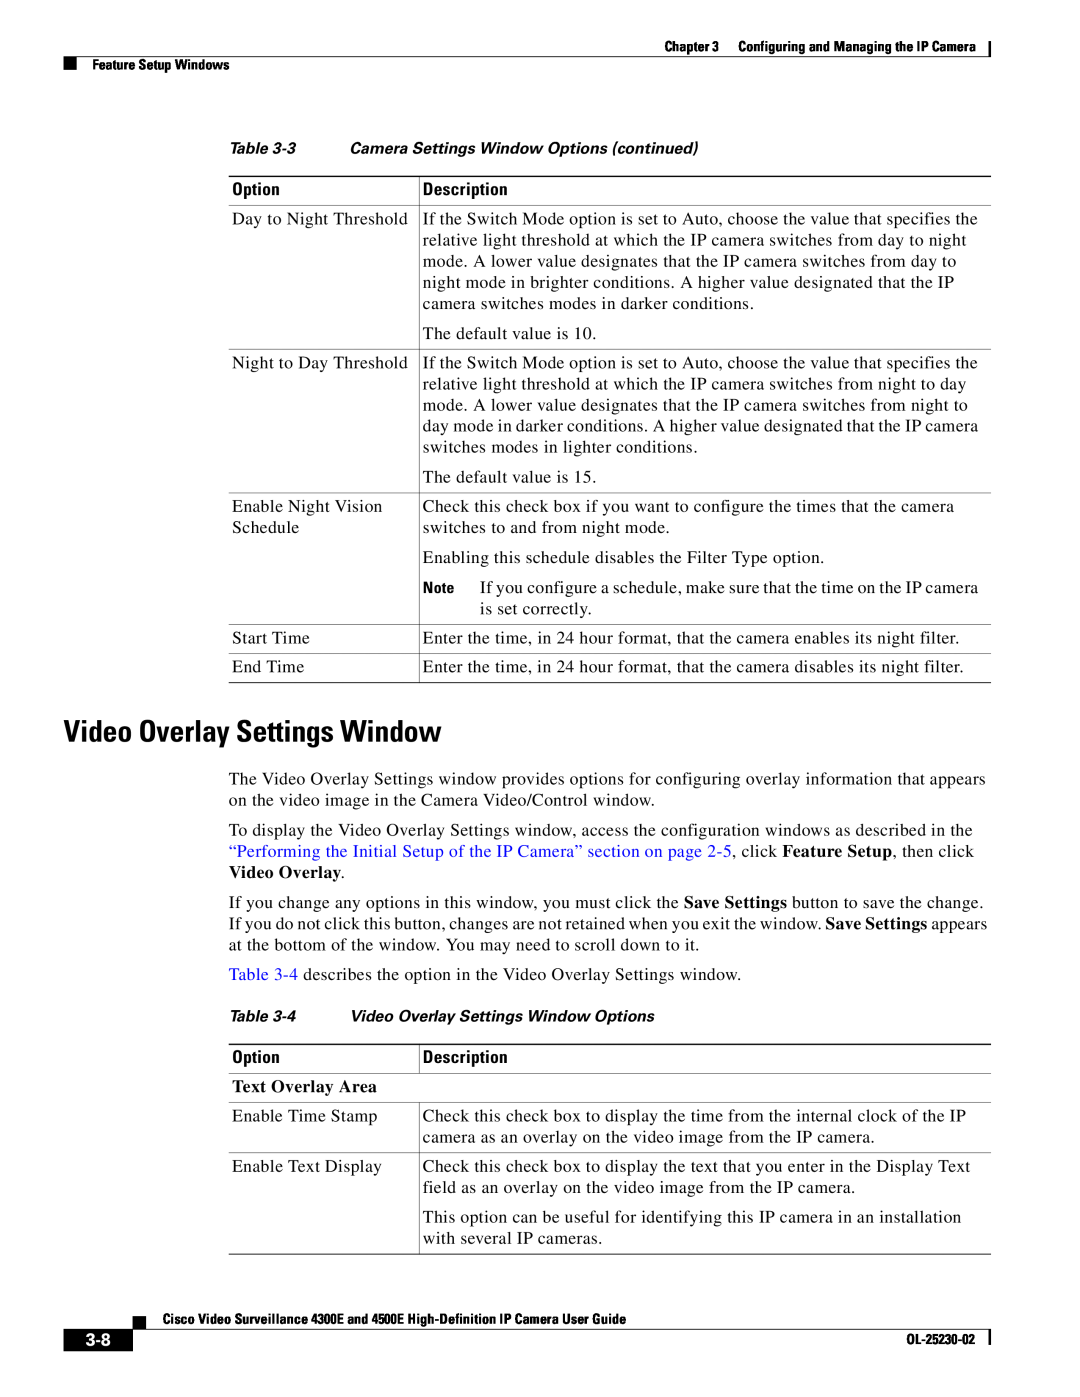 Cisco Systems 4300E, 4500E manual Video Overlay Settings Window, Text Overlay Area 